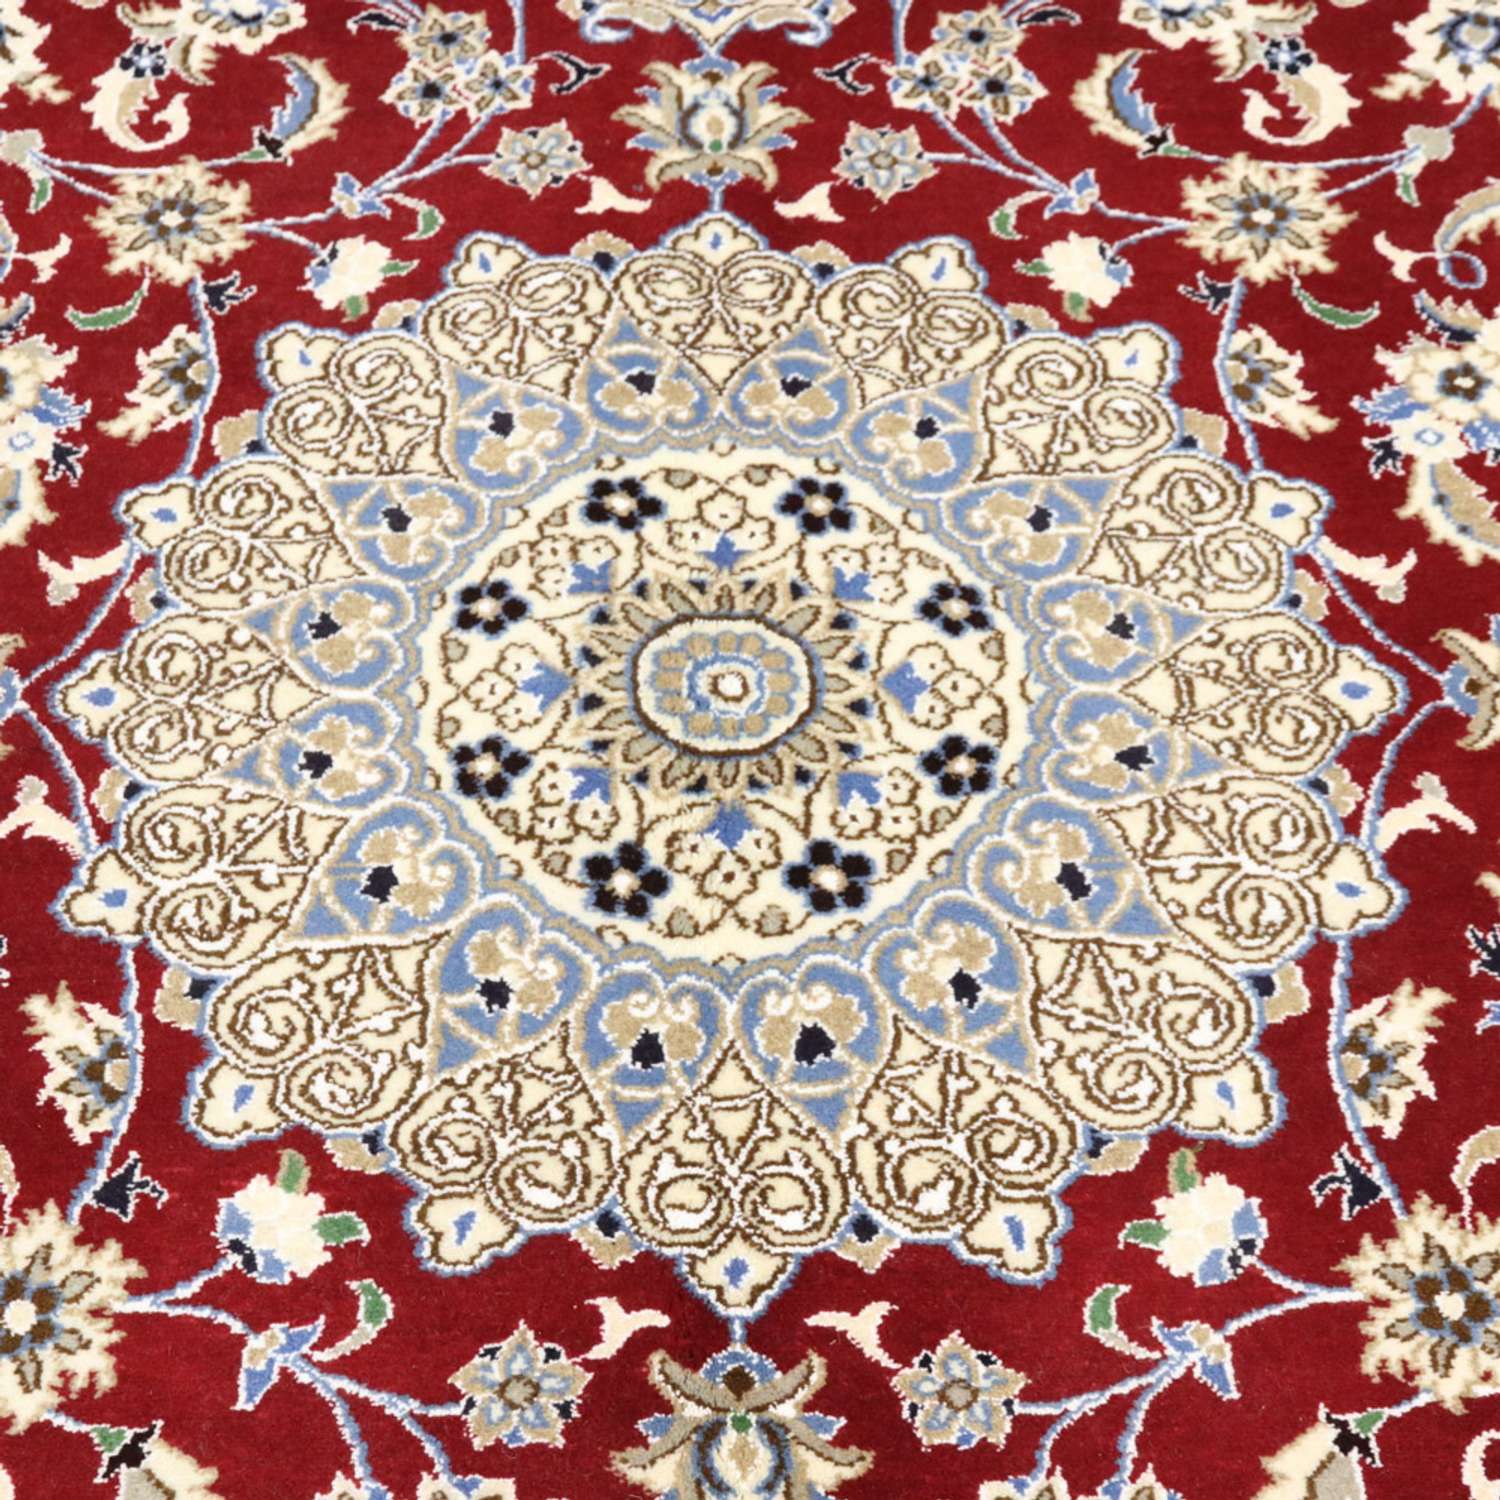 Perzisch tapijt - Nain - Koninklijk - 240 x 158 cm - rood